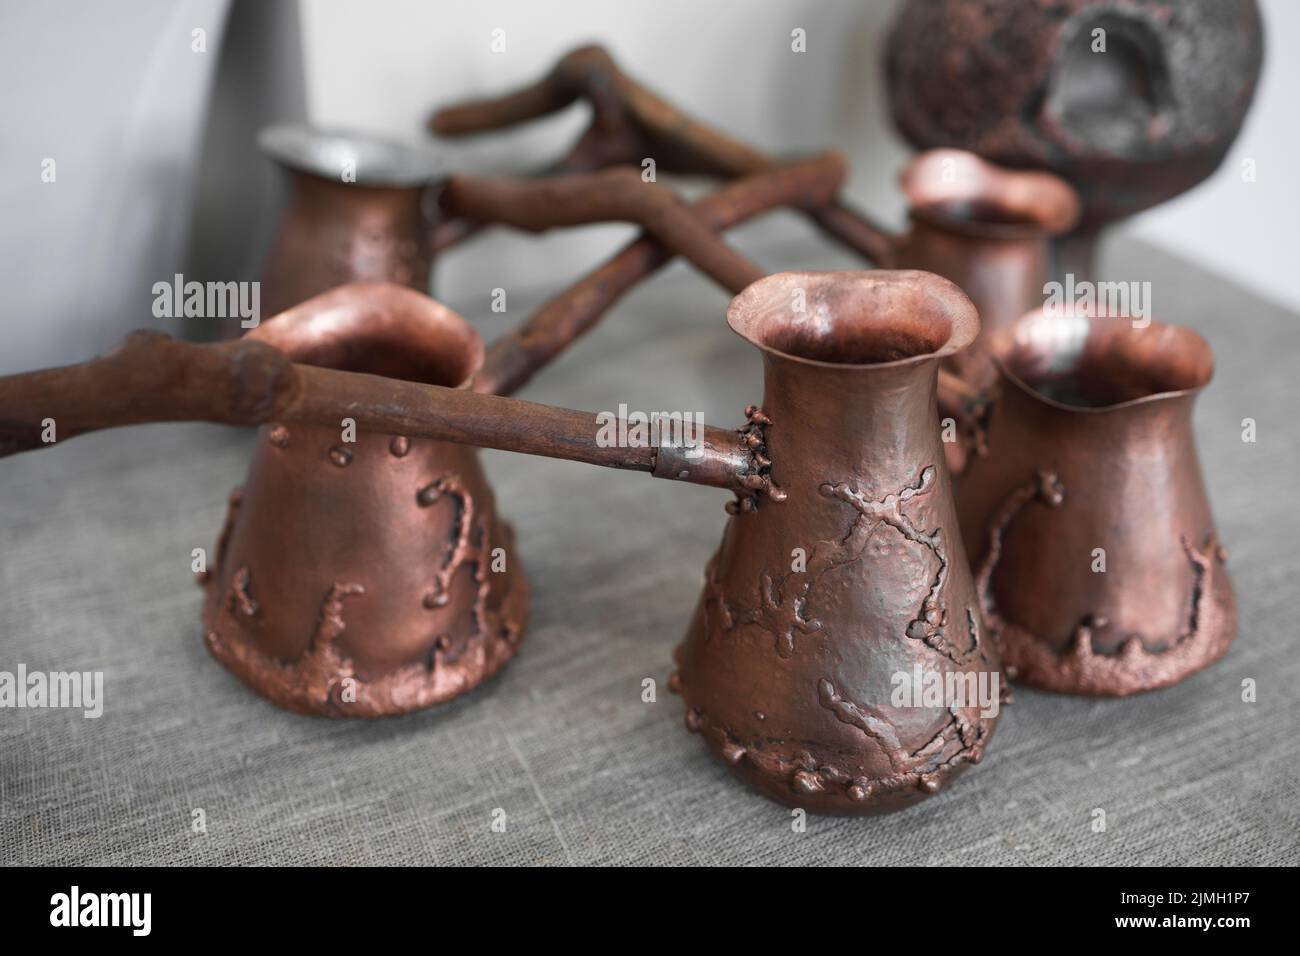 https://c8.alamy.com/comp/2JMH1P7/handmade-metal-cezves-for-turkish-coffee-choosing-a-cezves-for-coffee-concept-2JMH1P7.jpg